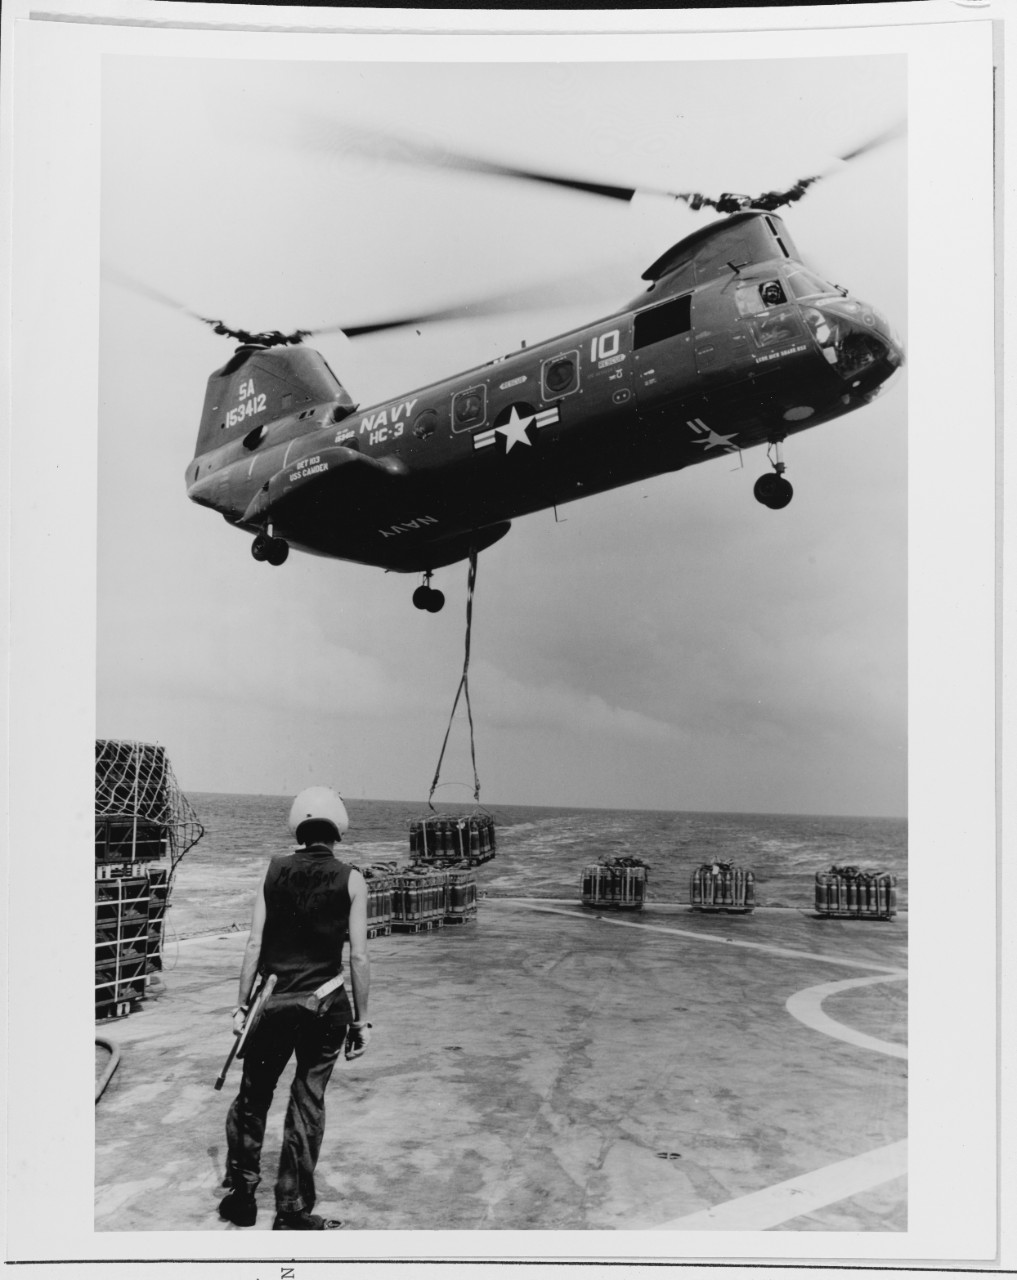 A UH-46A "Sea Knight"